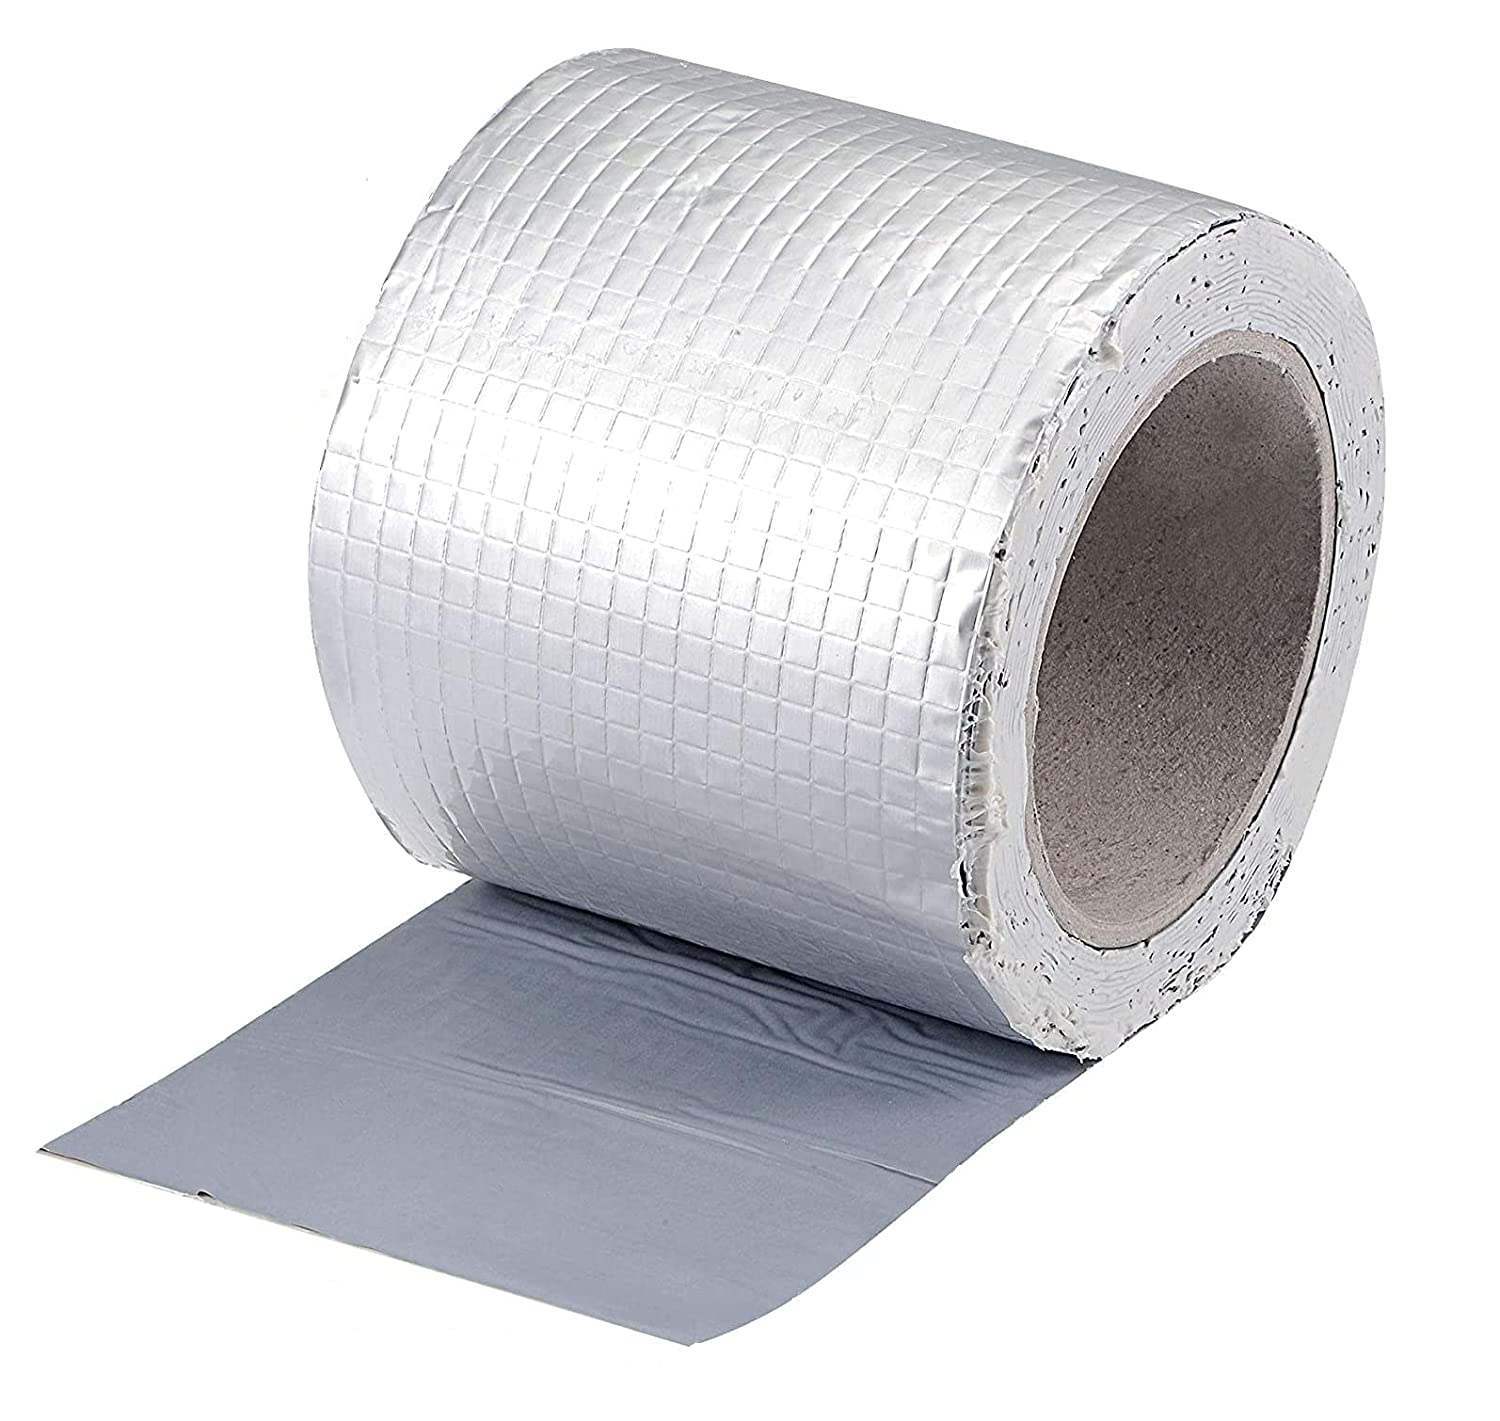 Hukimoyo butyl tape waterproof for sheets, leak proof sealant for